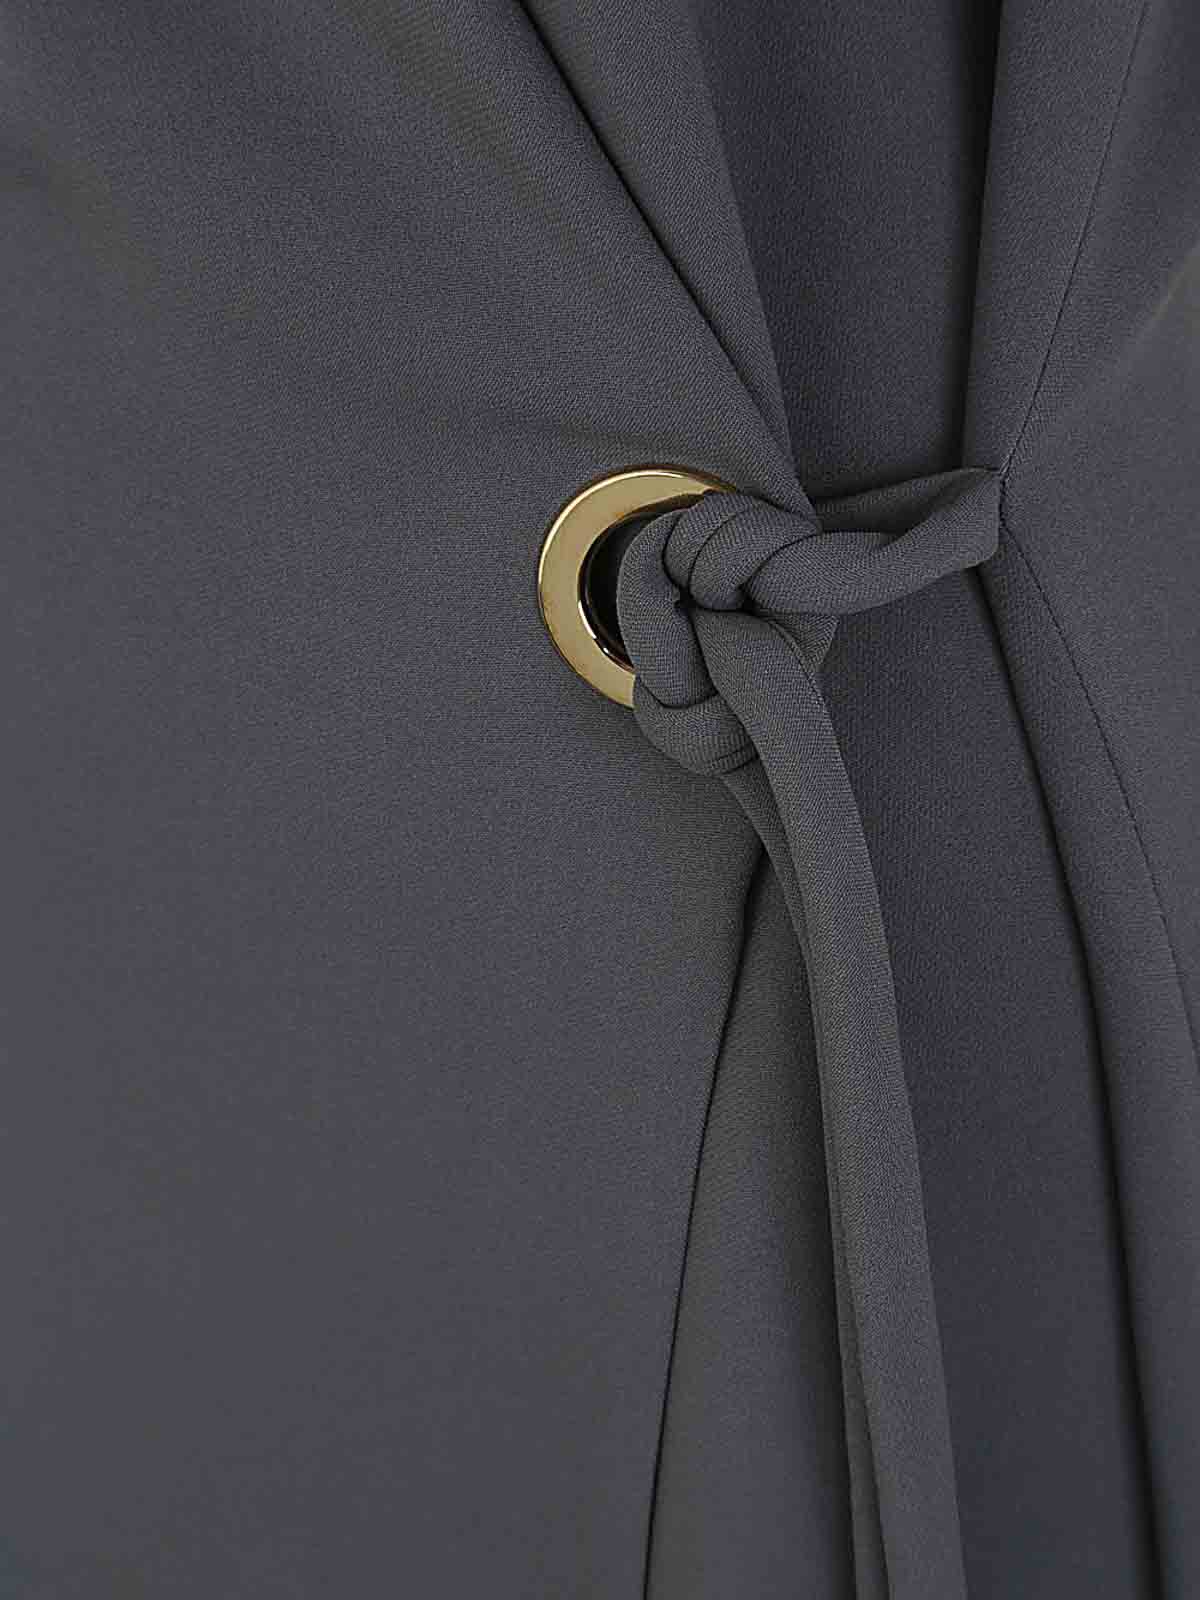 Shop Giorgio Armani Sleeveless Long Dress In Grey